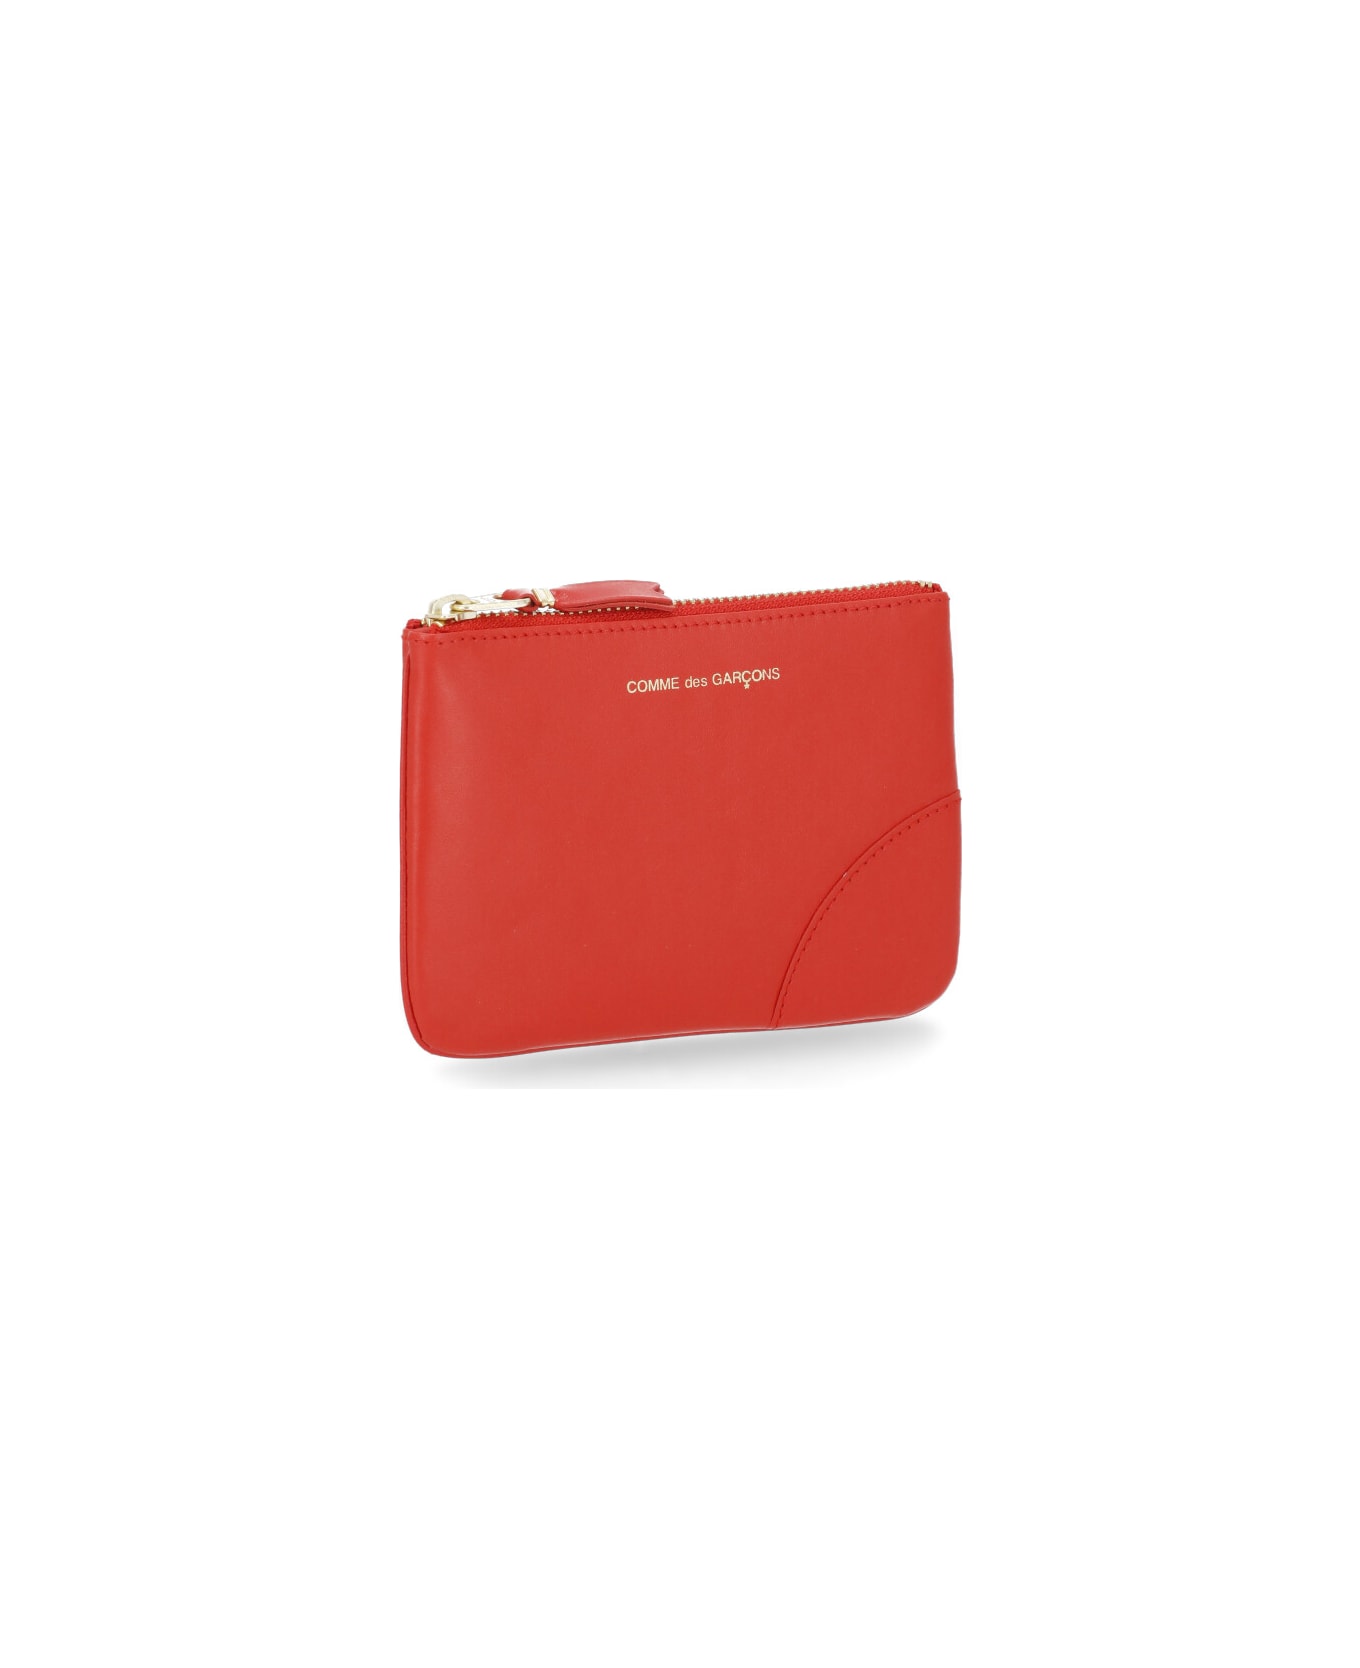 Comme des Garçons Wallet Wallet With Logo - Red 財布